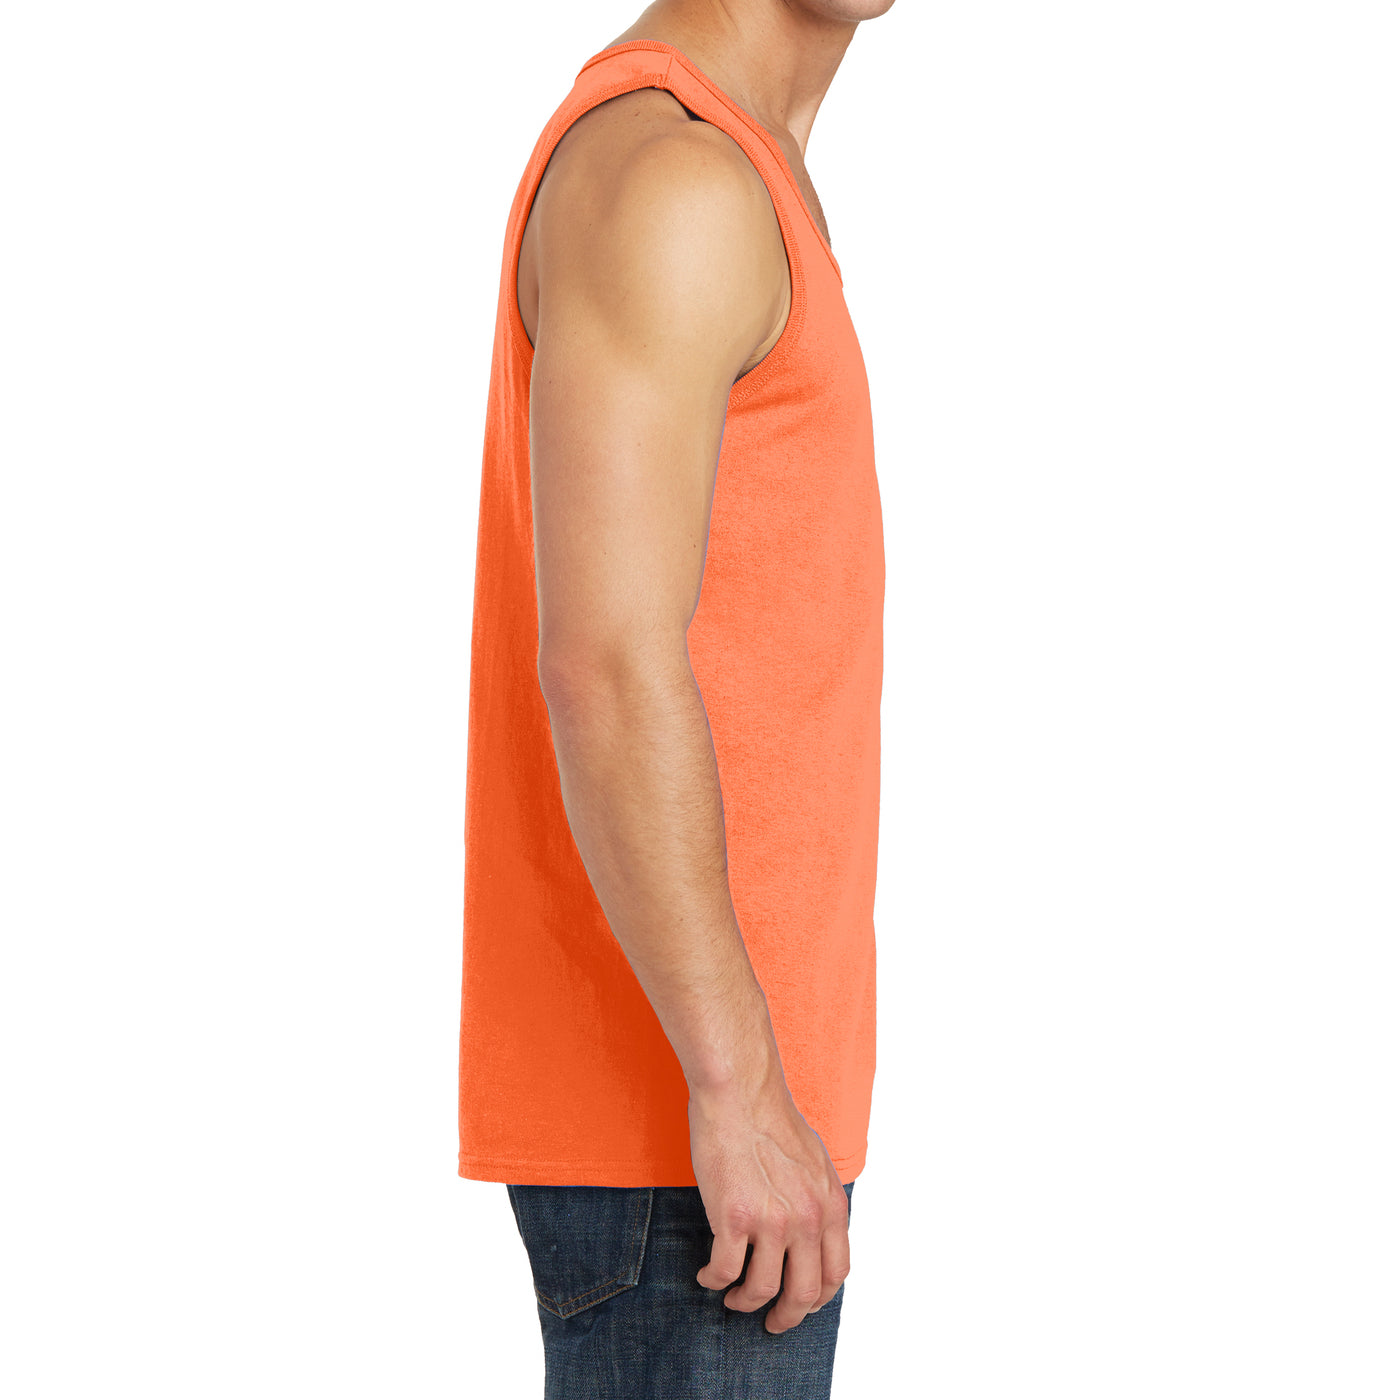 Men's Core Cotton Tank Top - Neon Orange - Side